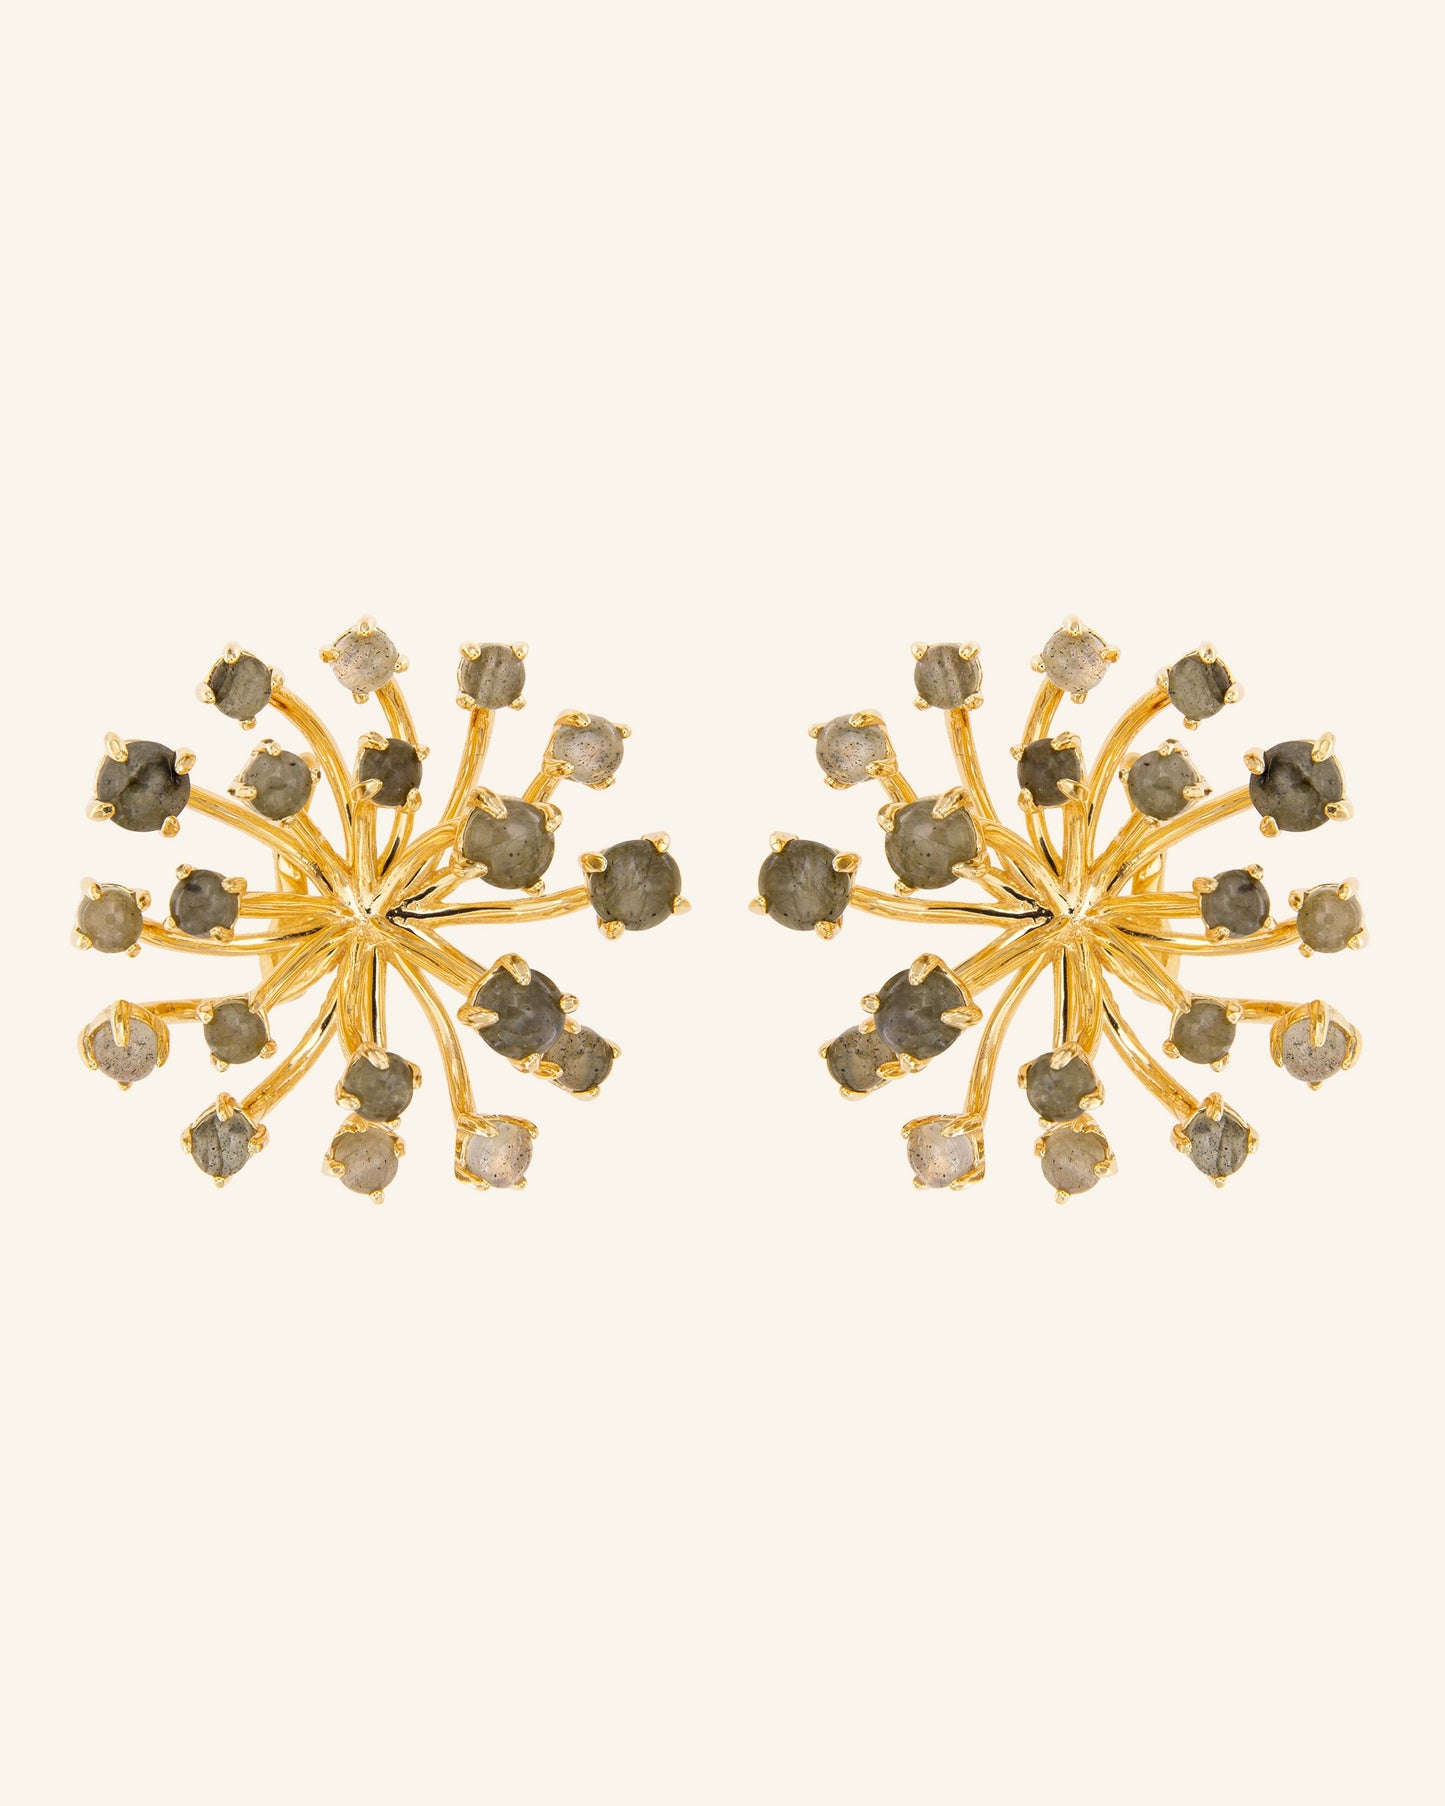 Magnolia earrings with labradorite